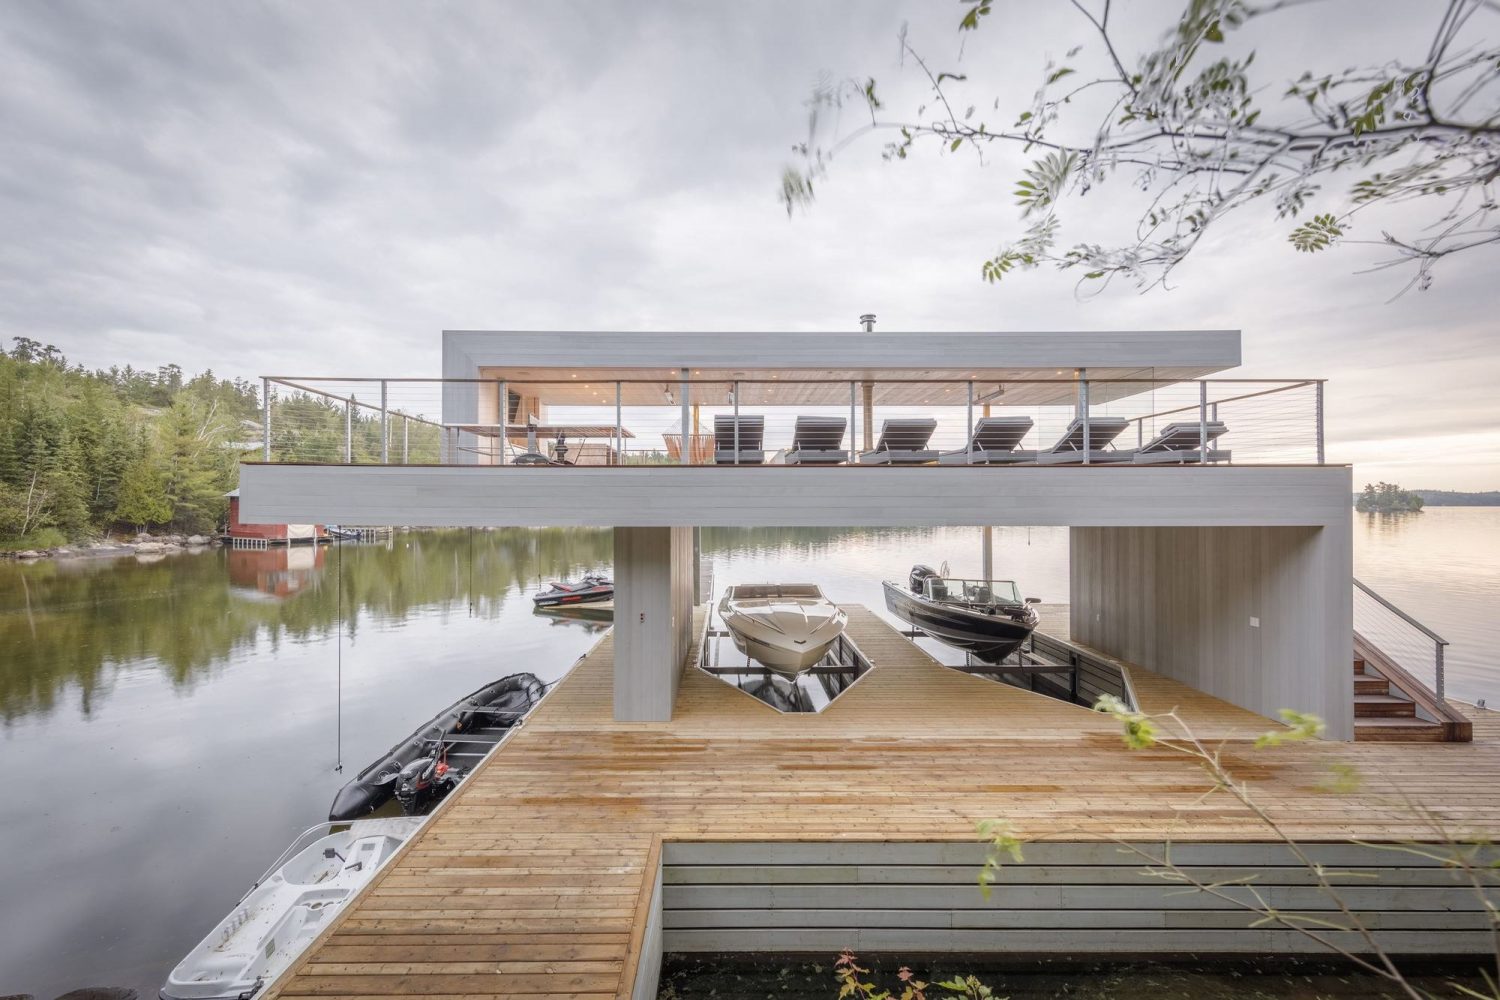 Boathouse by Cibinel Architecture